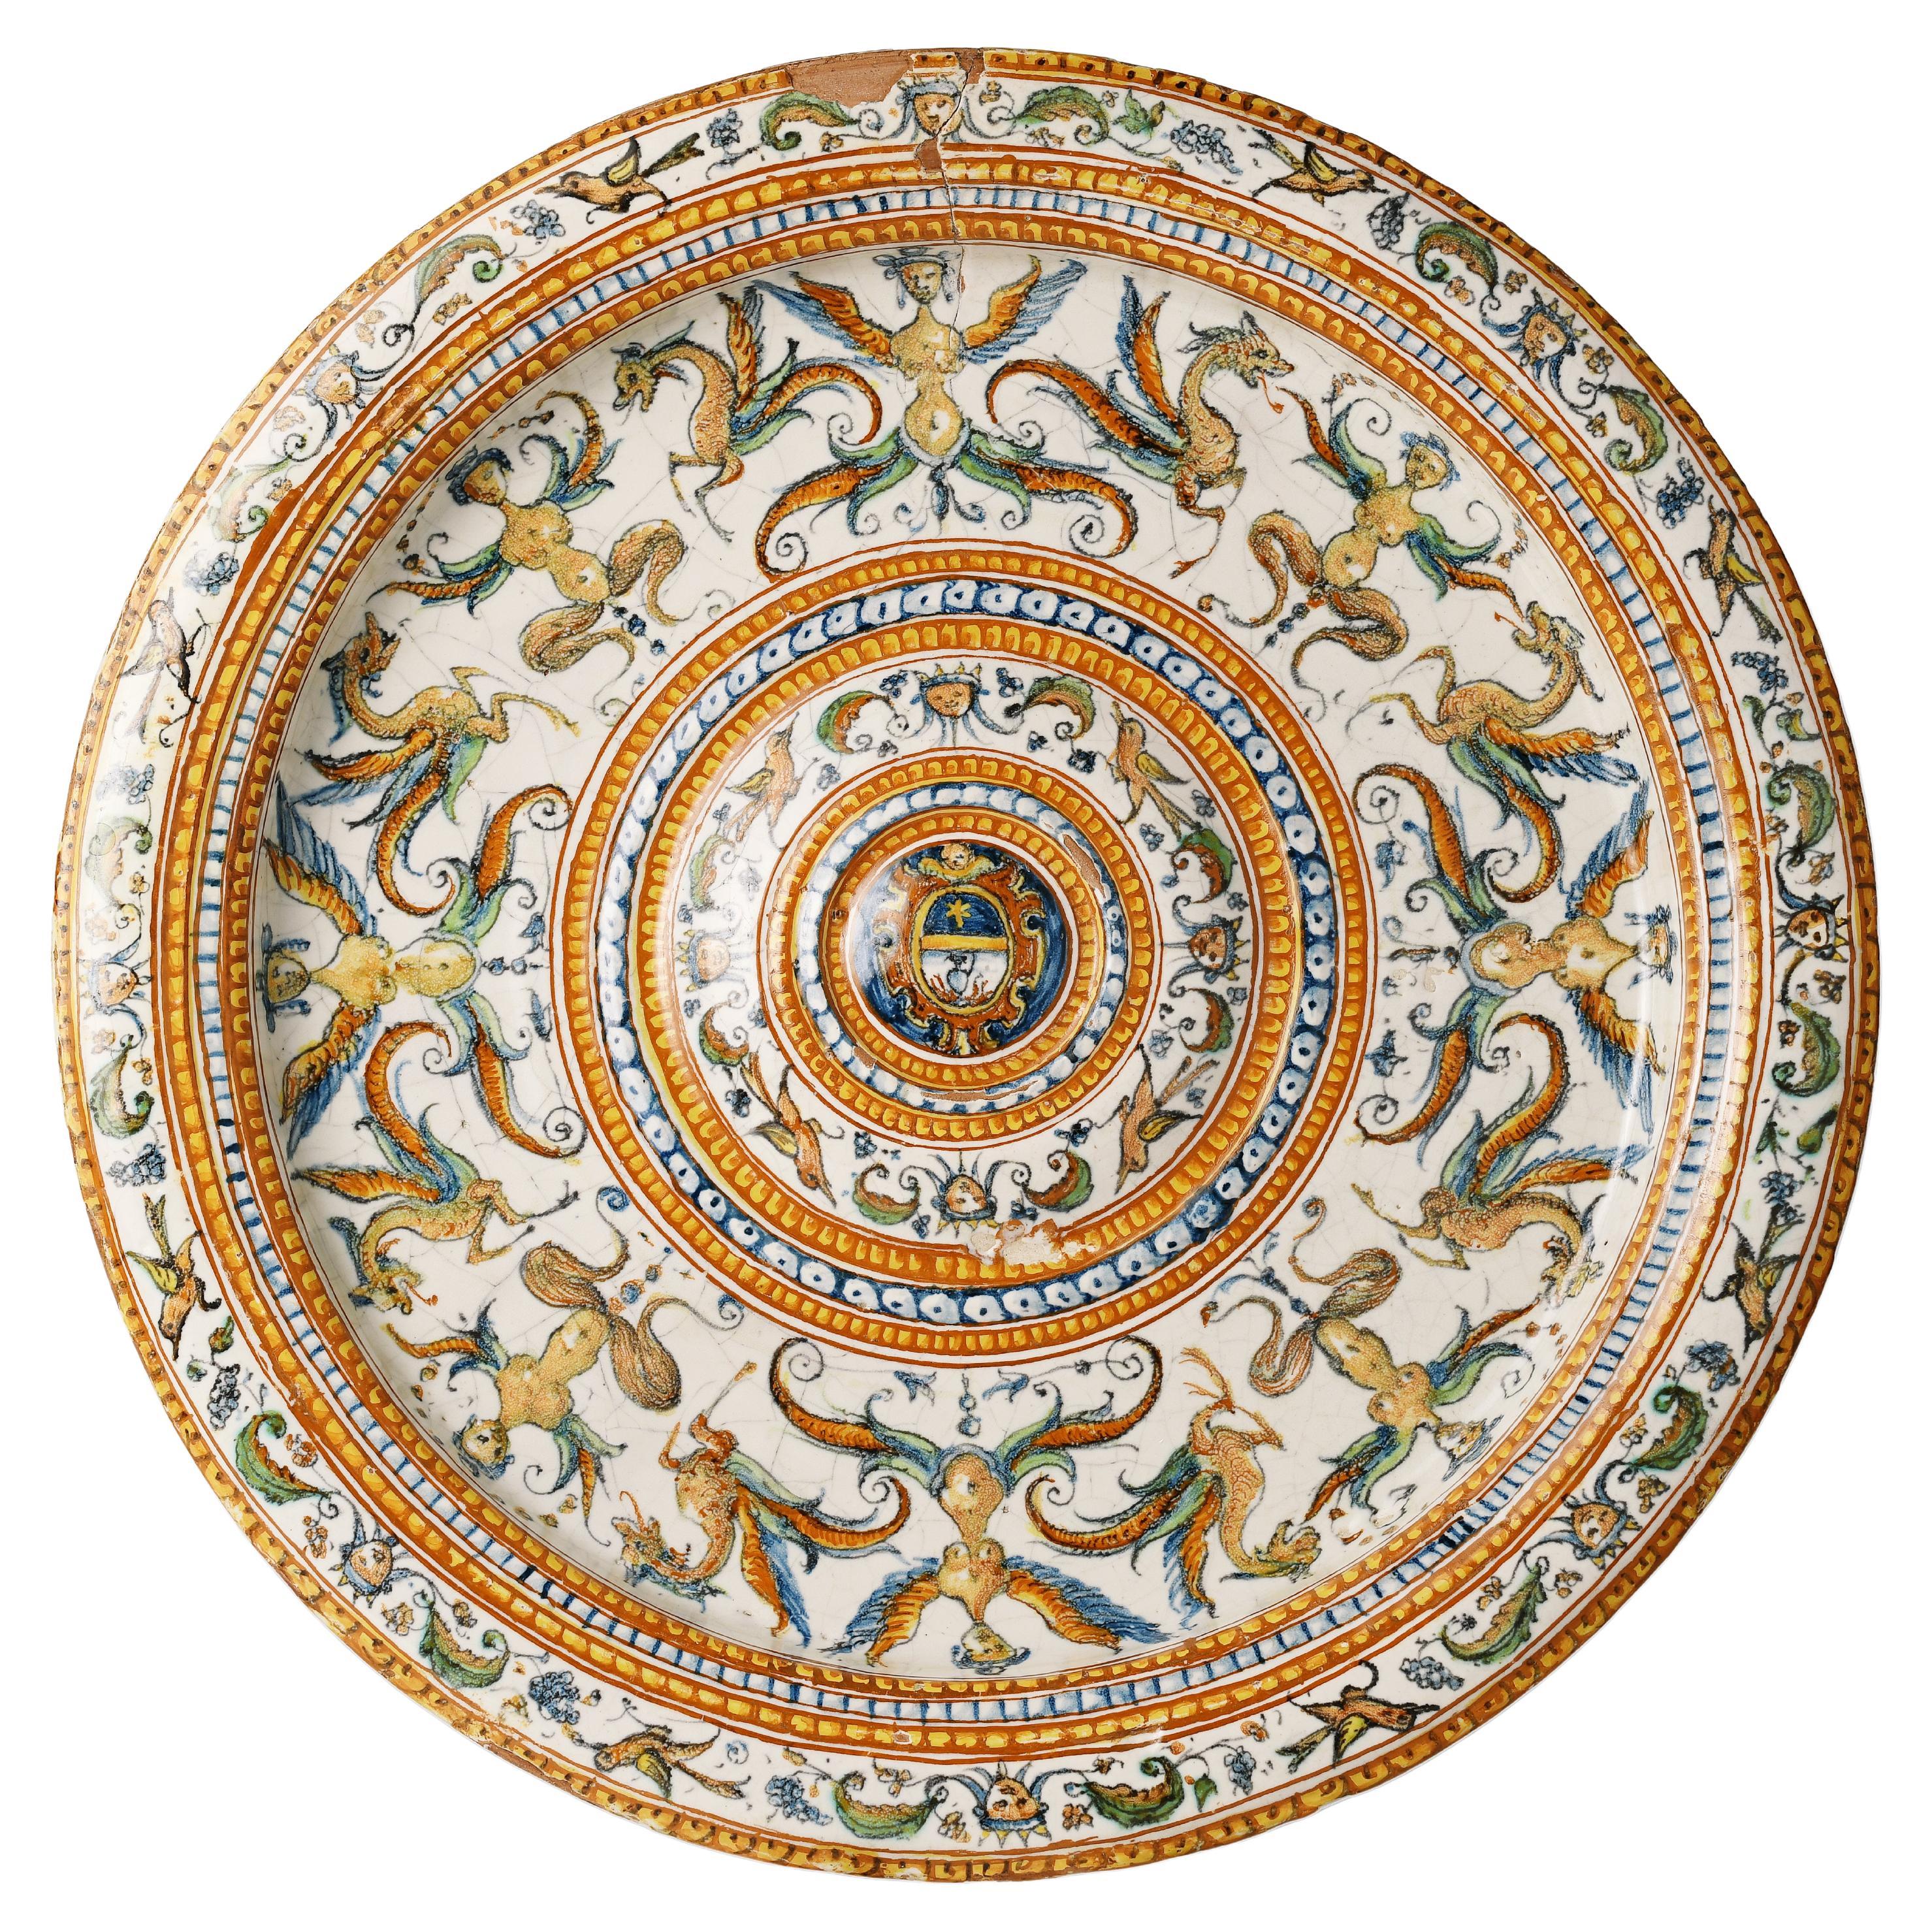 Italian Renaissance Plate, Patanazzi Workshop Urbino, End of 16th Century For Sale